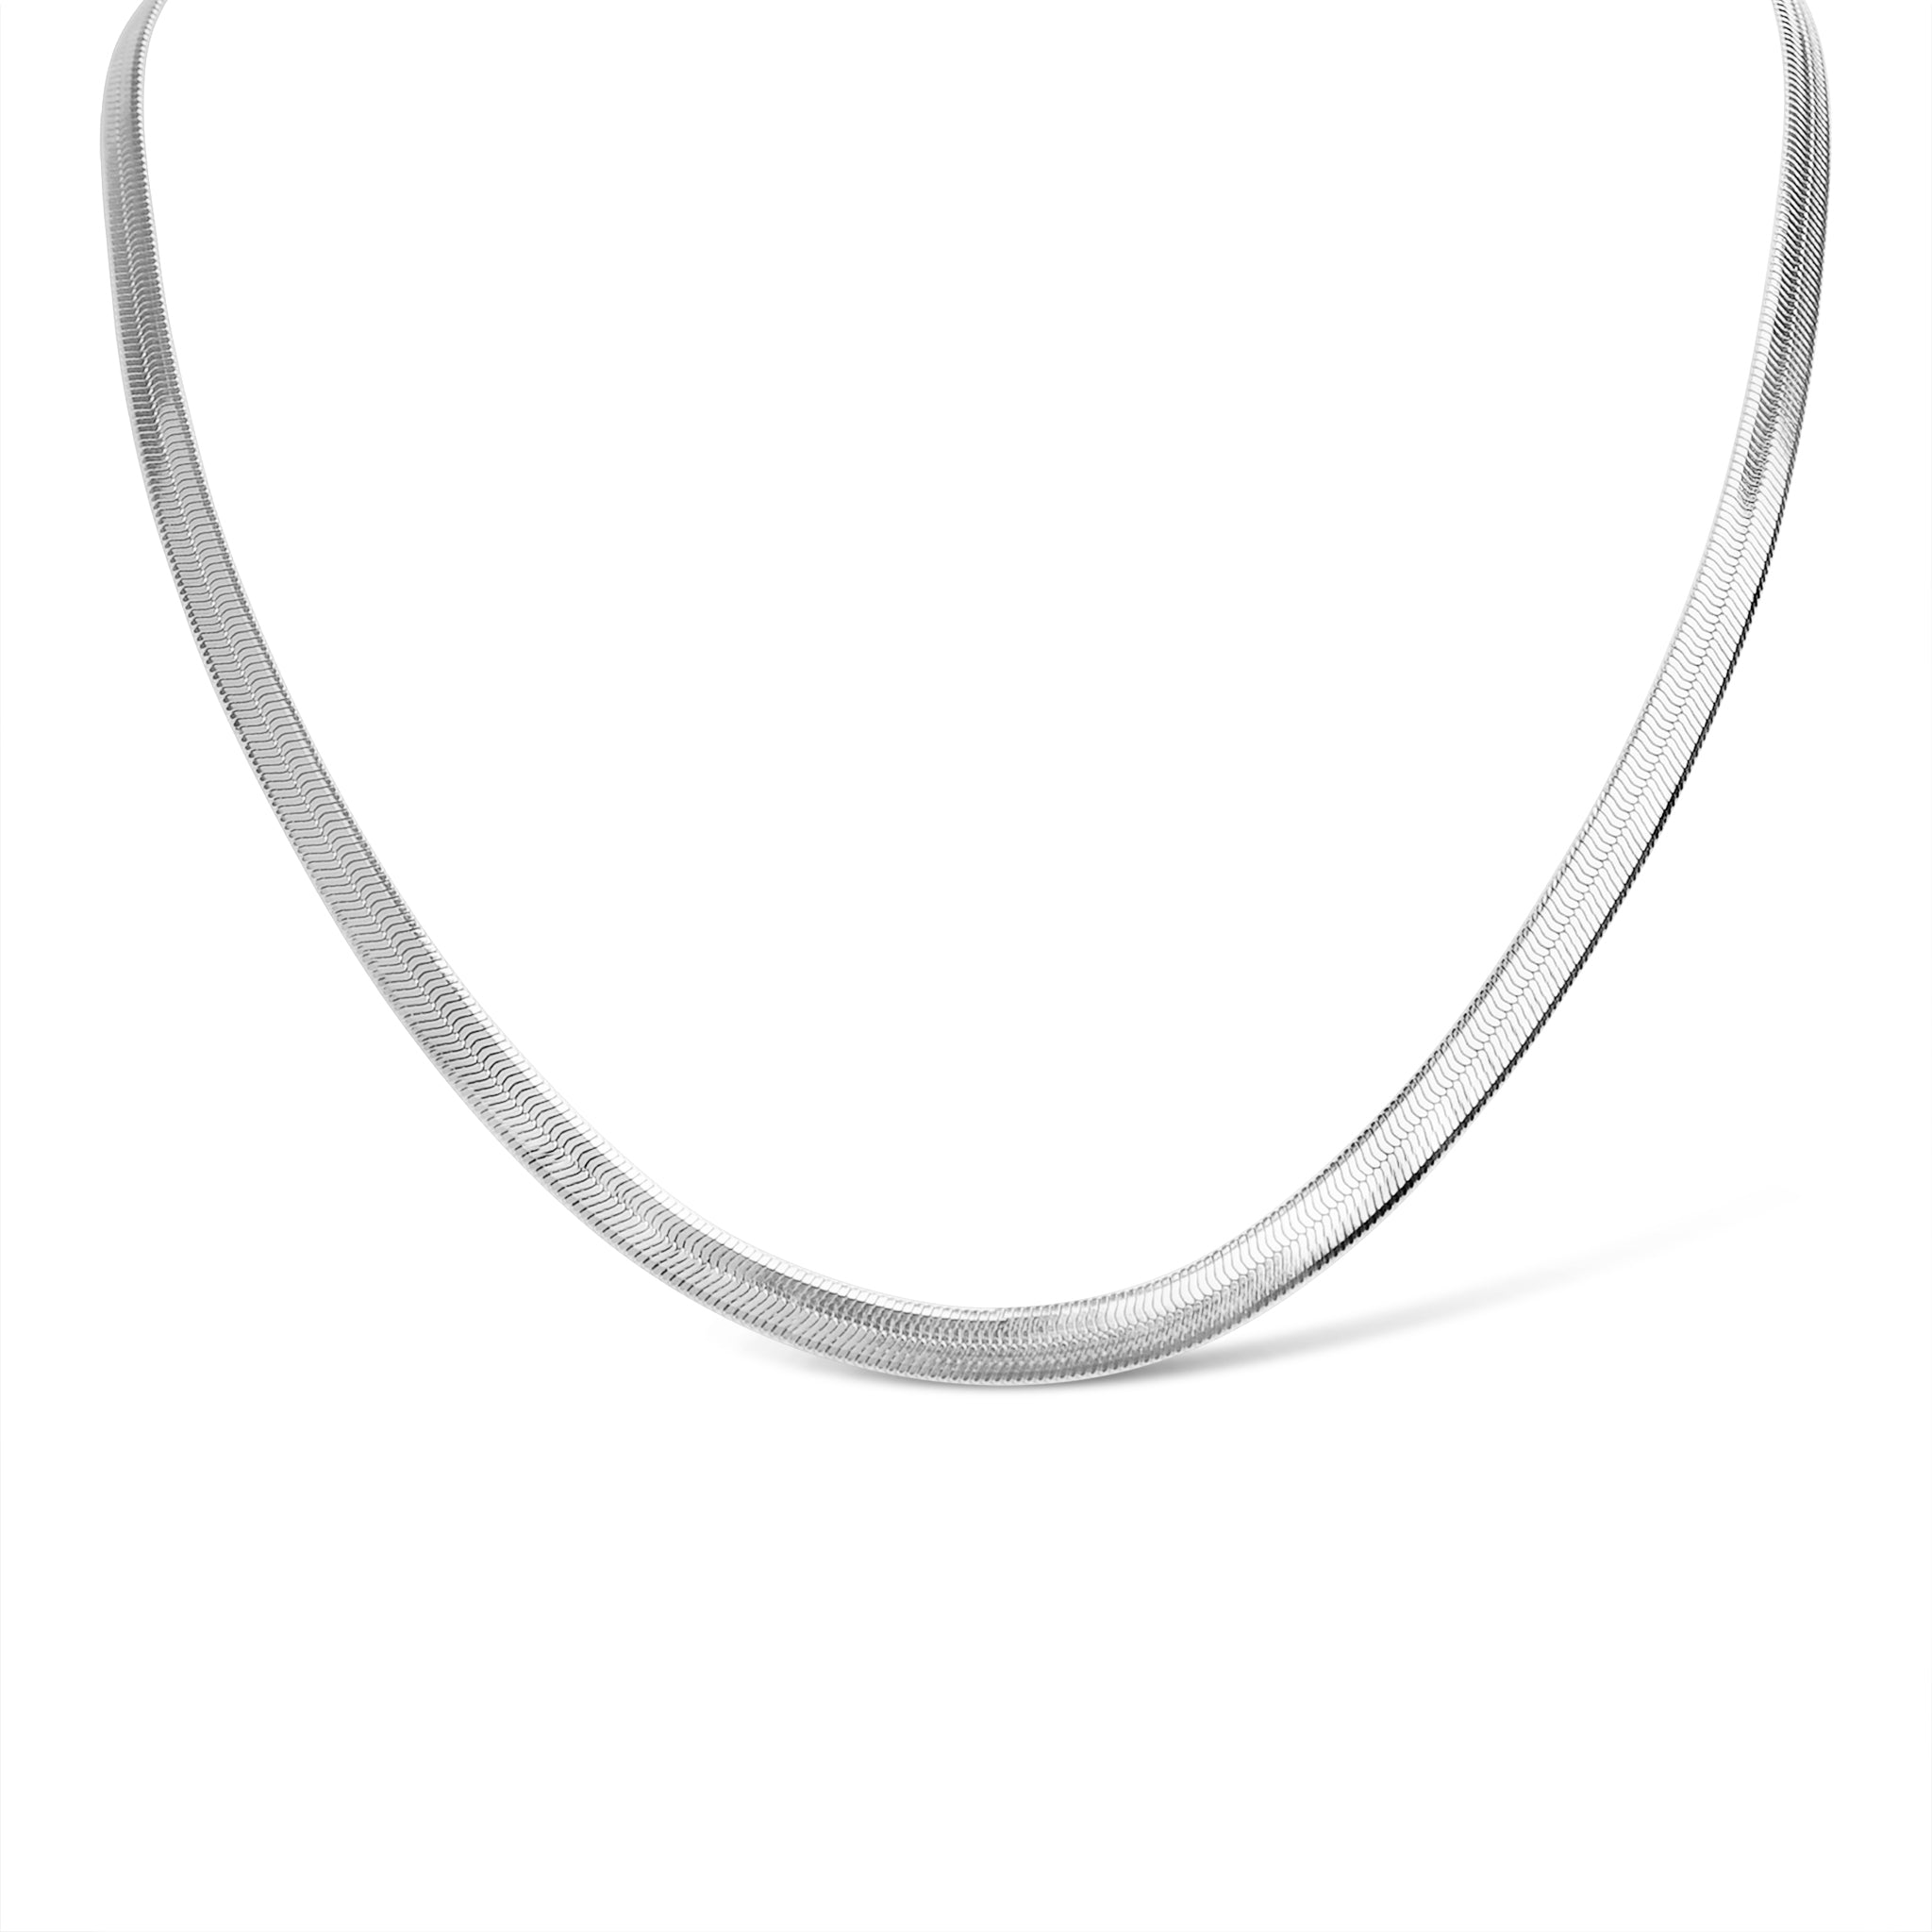 Stainless Steel Herringbone Chain Necklace